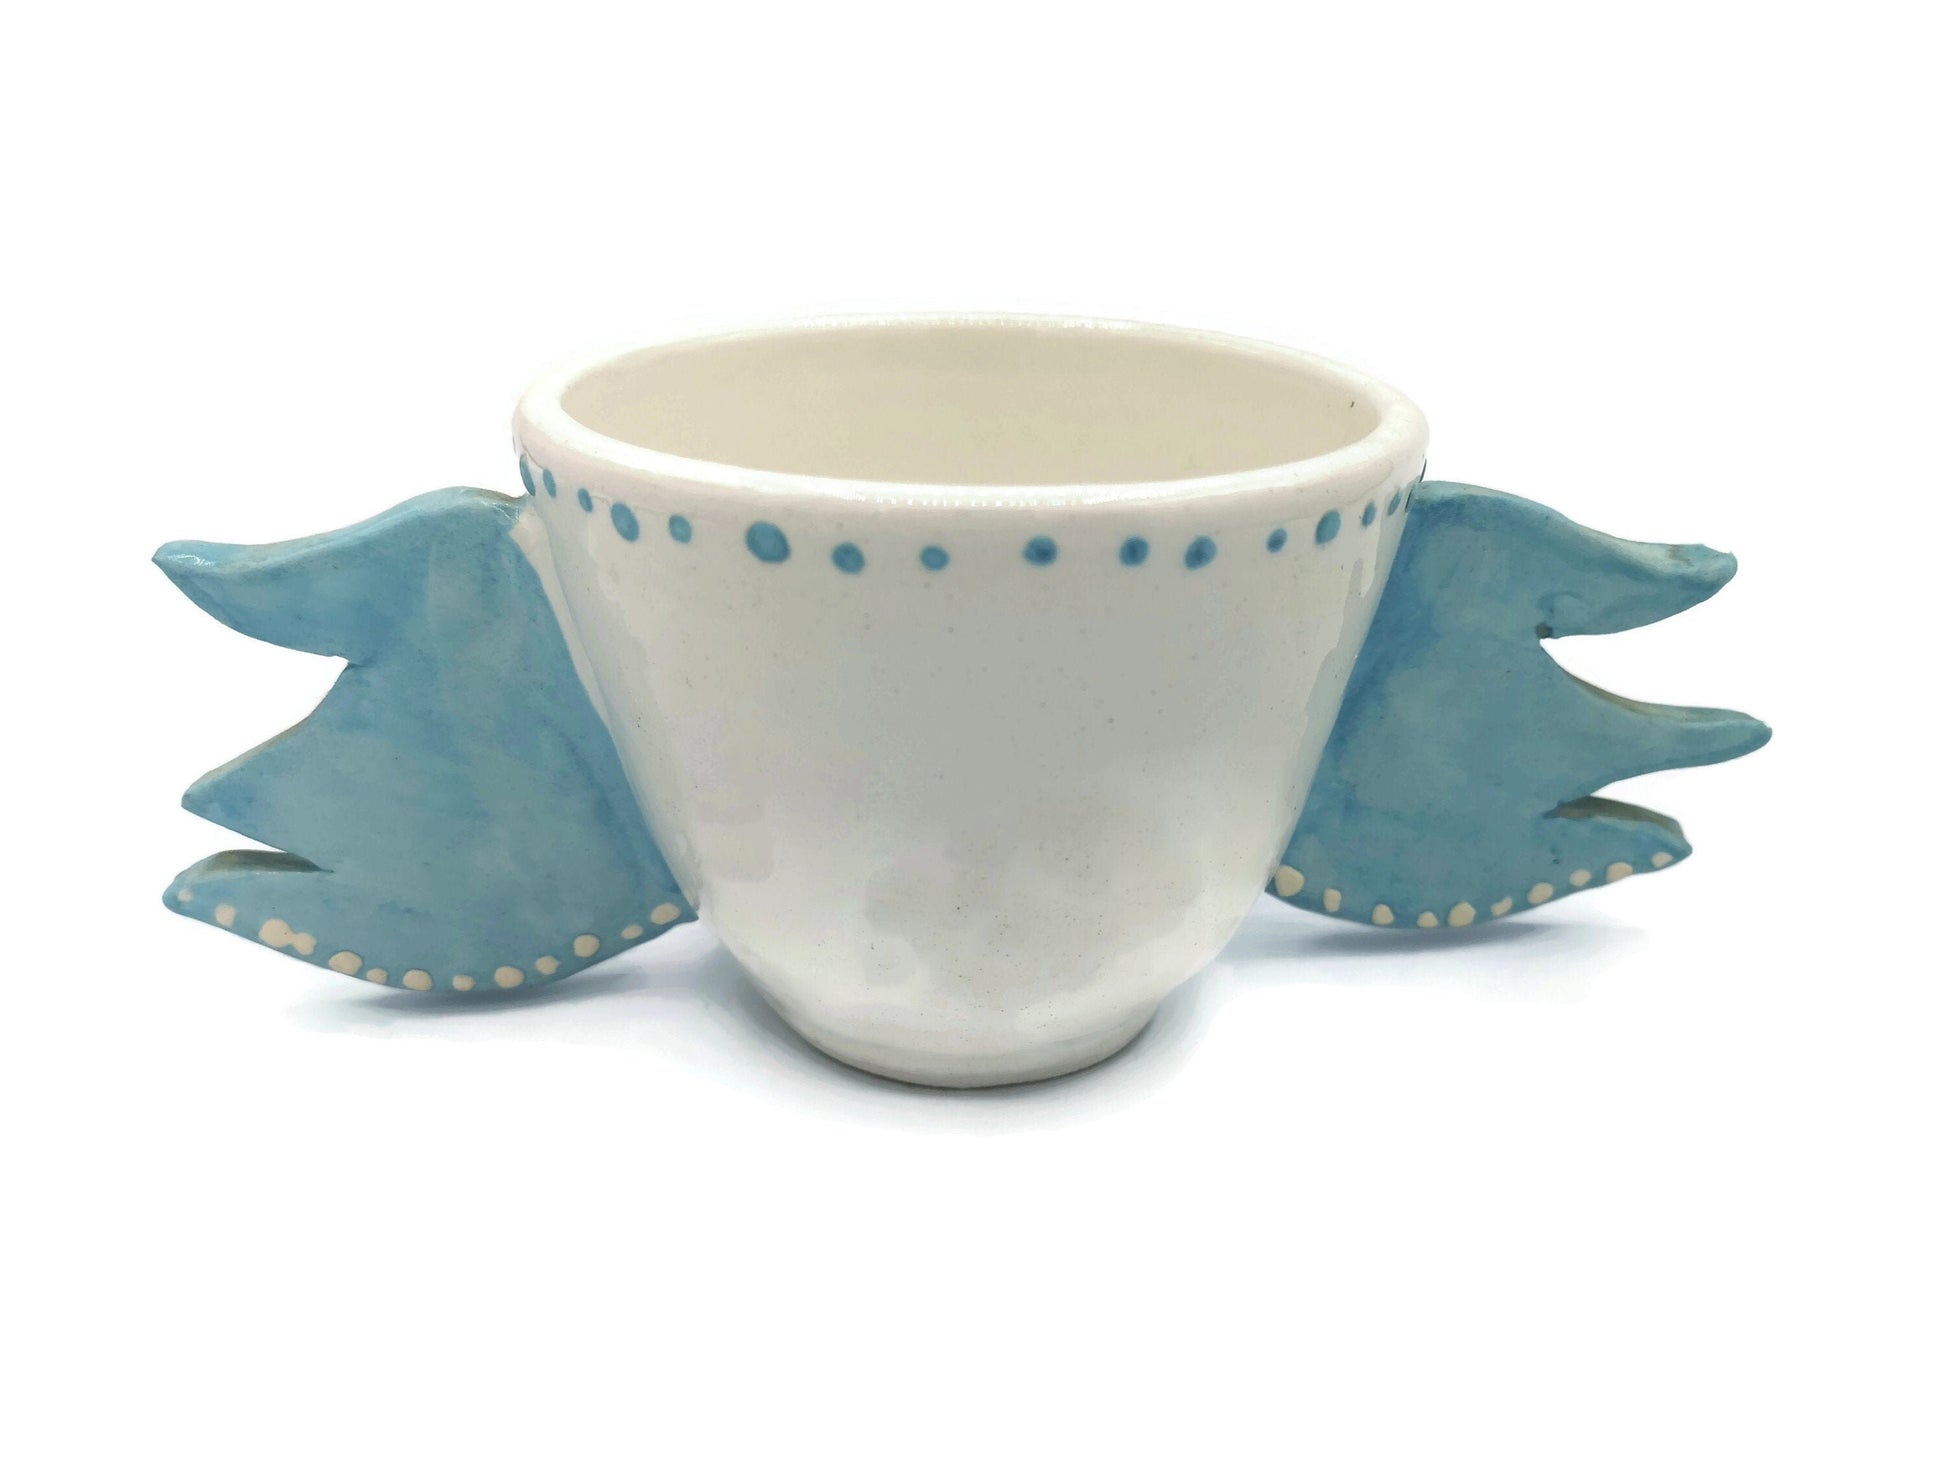 Turquoise Blue Handmade Ceramic Mug With Unique Handles, Cute Coffee Mugs For Hot Chocolate, Best Friends Gift Idea, Large Pottery Mug - Ceramica Ana Rafael